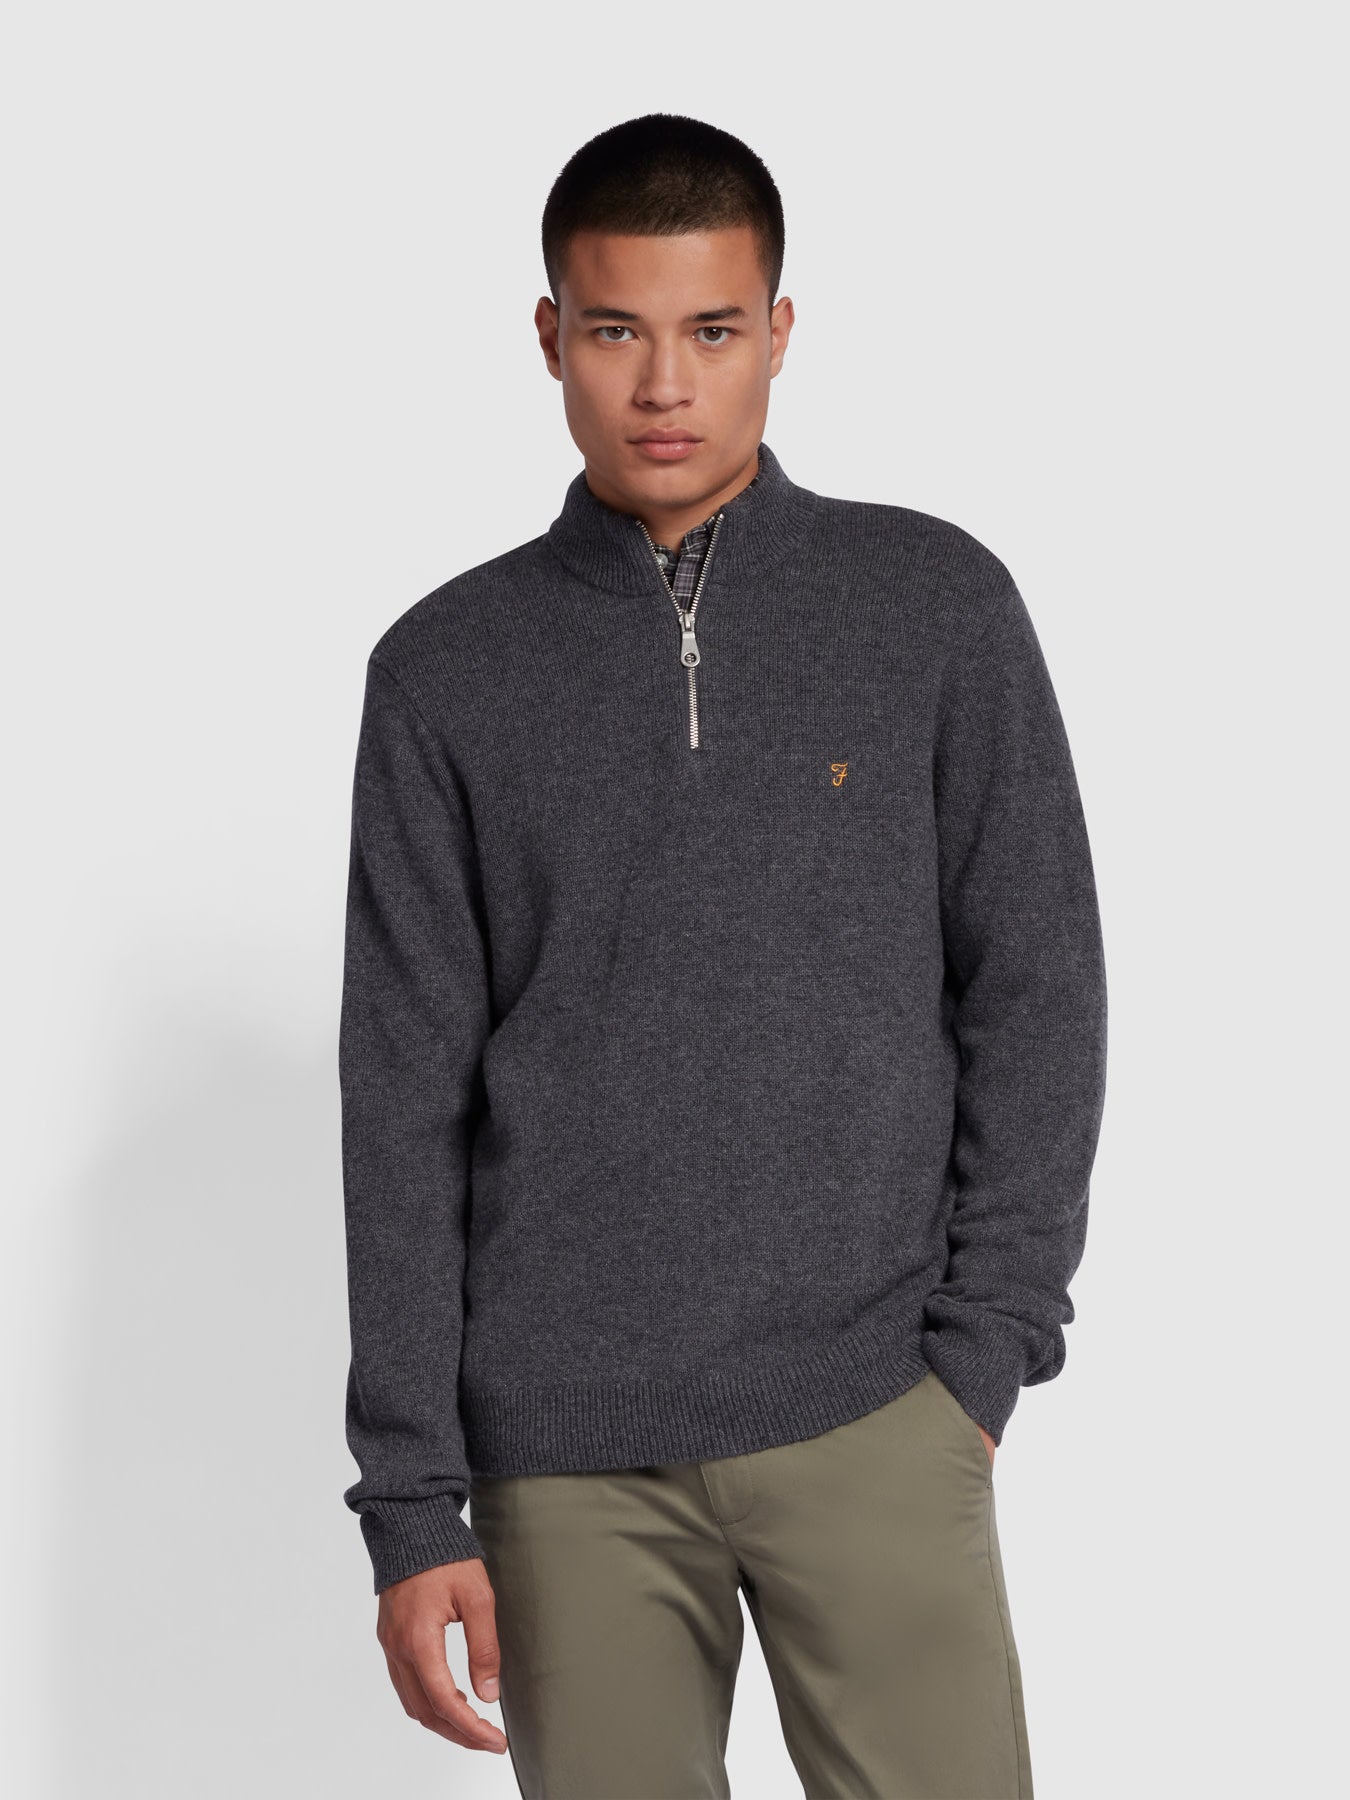 View Birchall Slim Fit Quarter Zip Sweater In Farah Grey Marl information